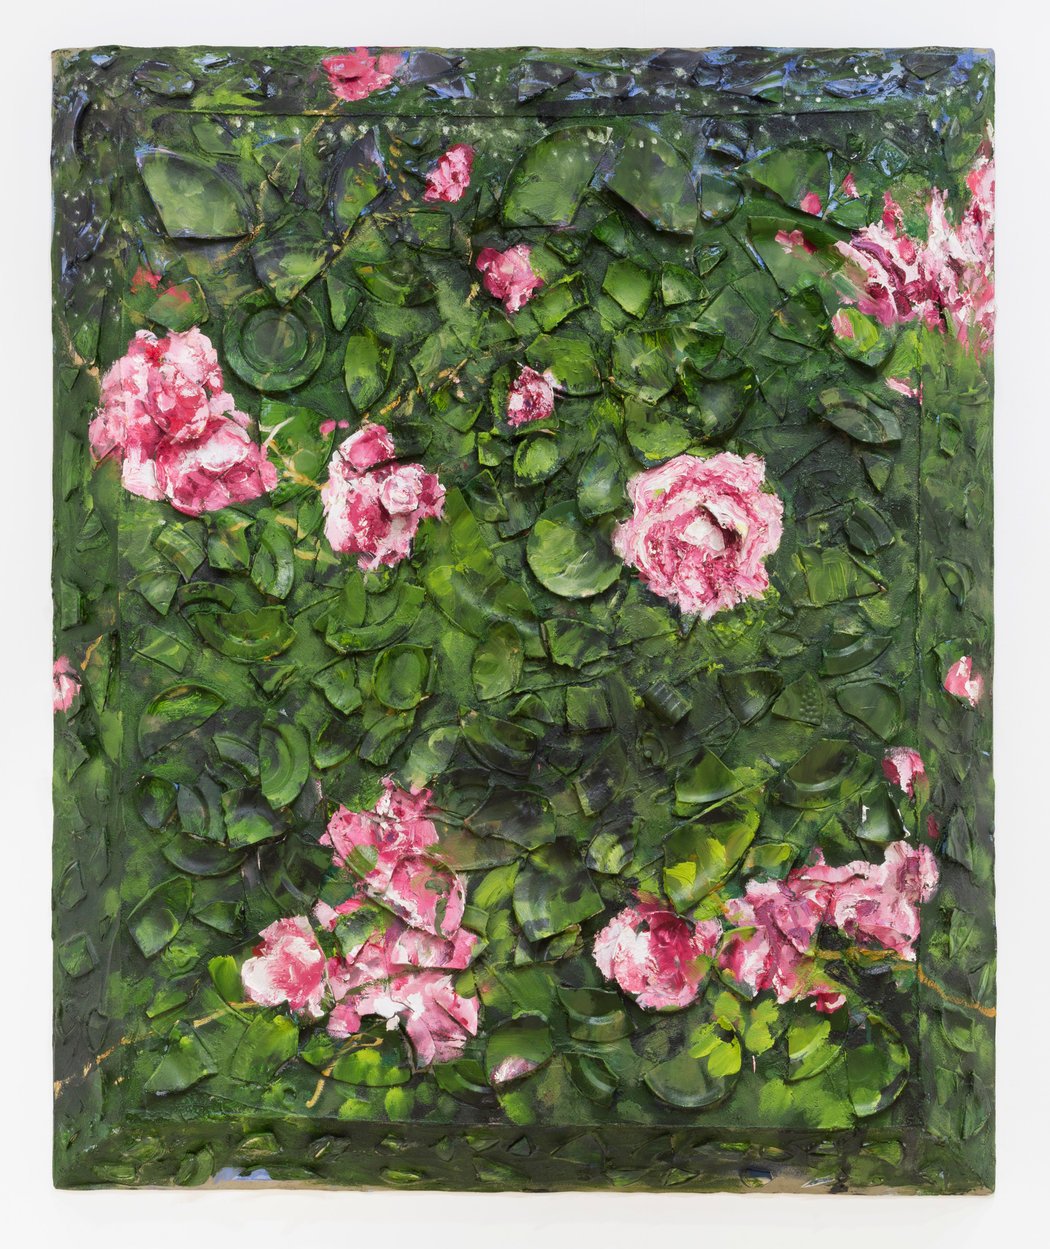 Happy birthday Julian Schnabel.
Rose Painting (Near Van Gogh s Grave) III, 2015 